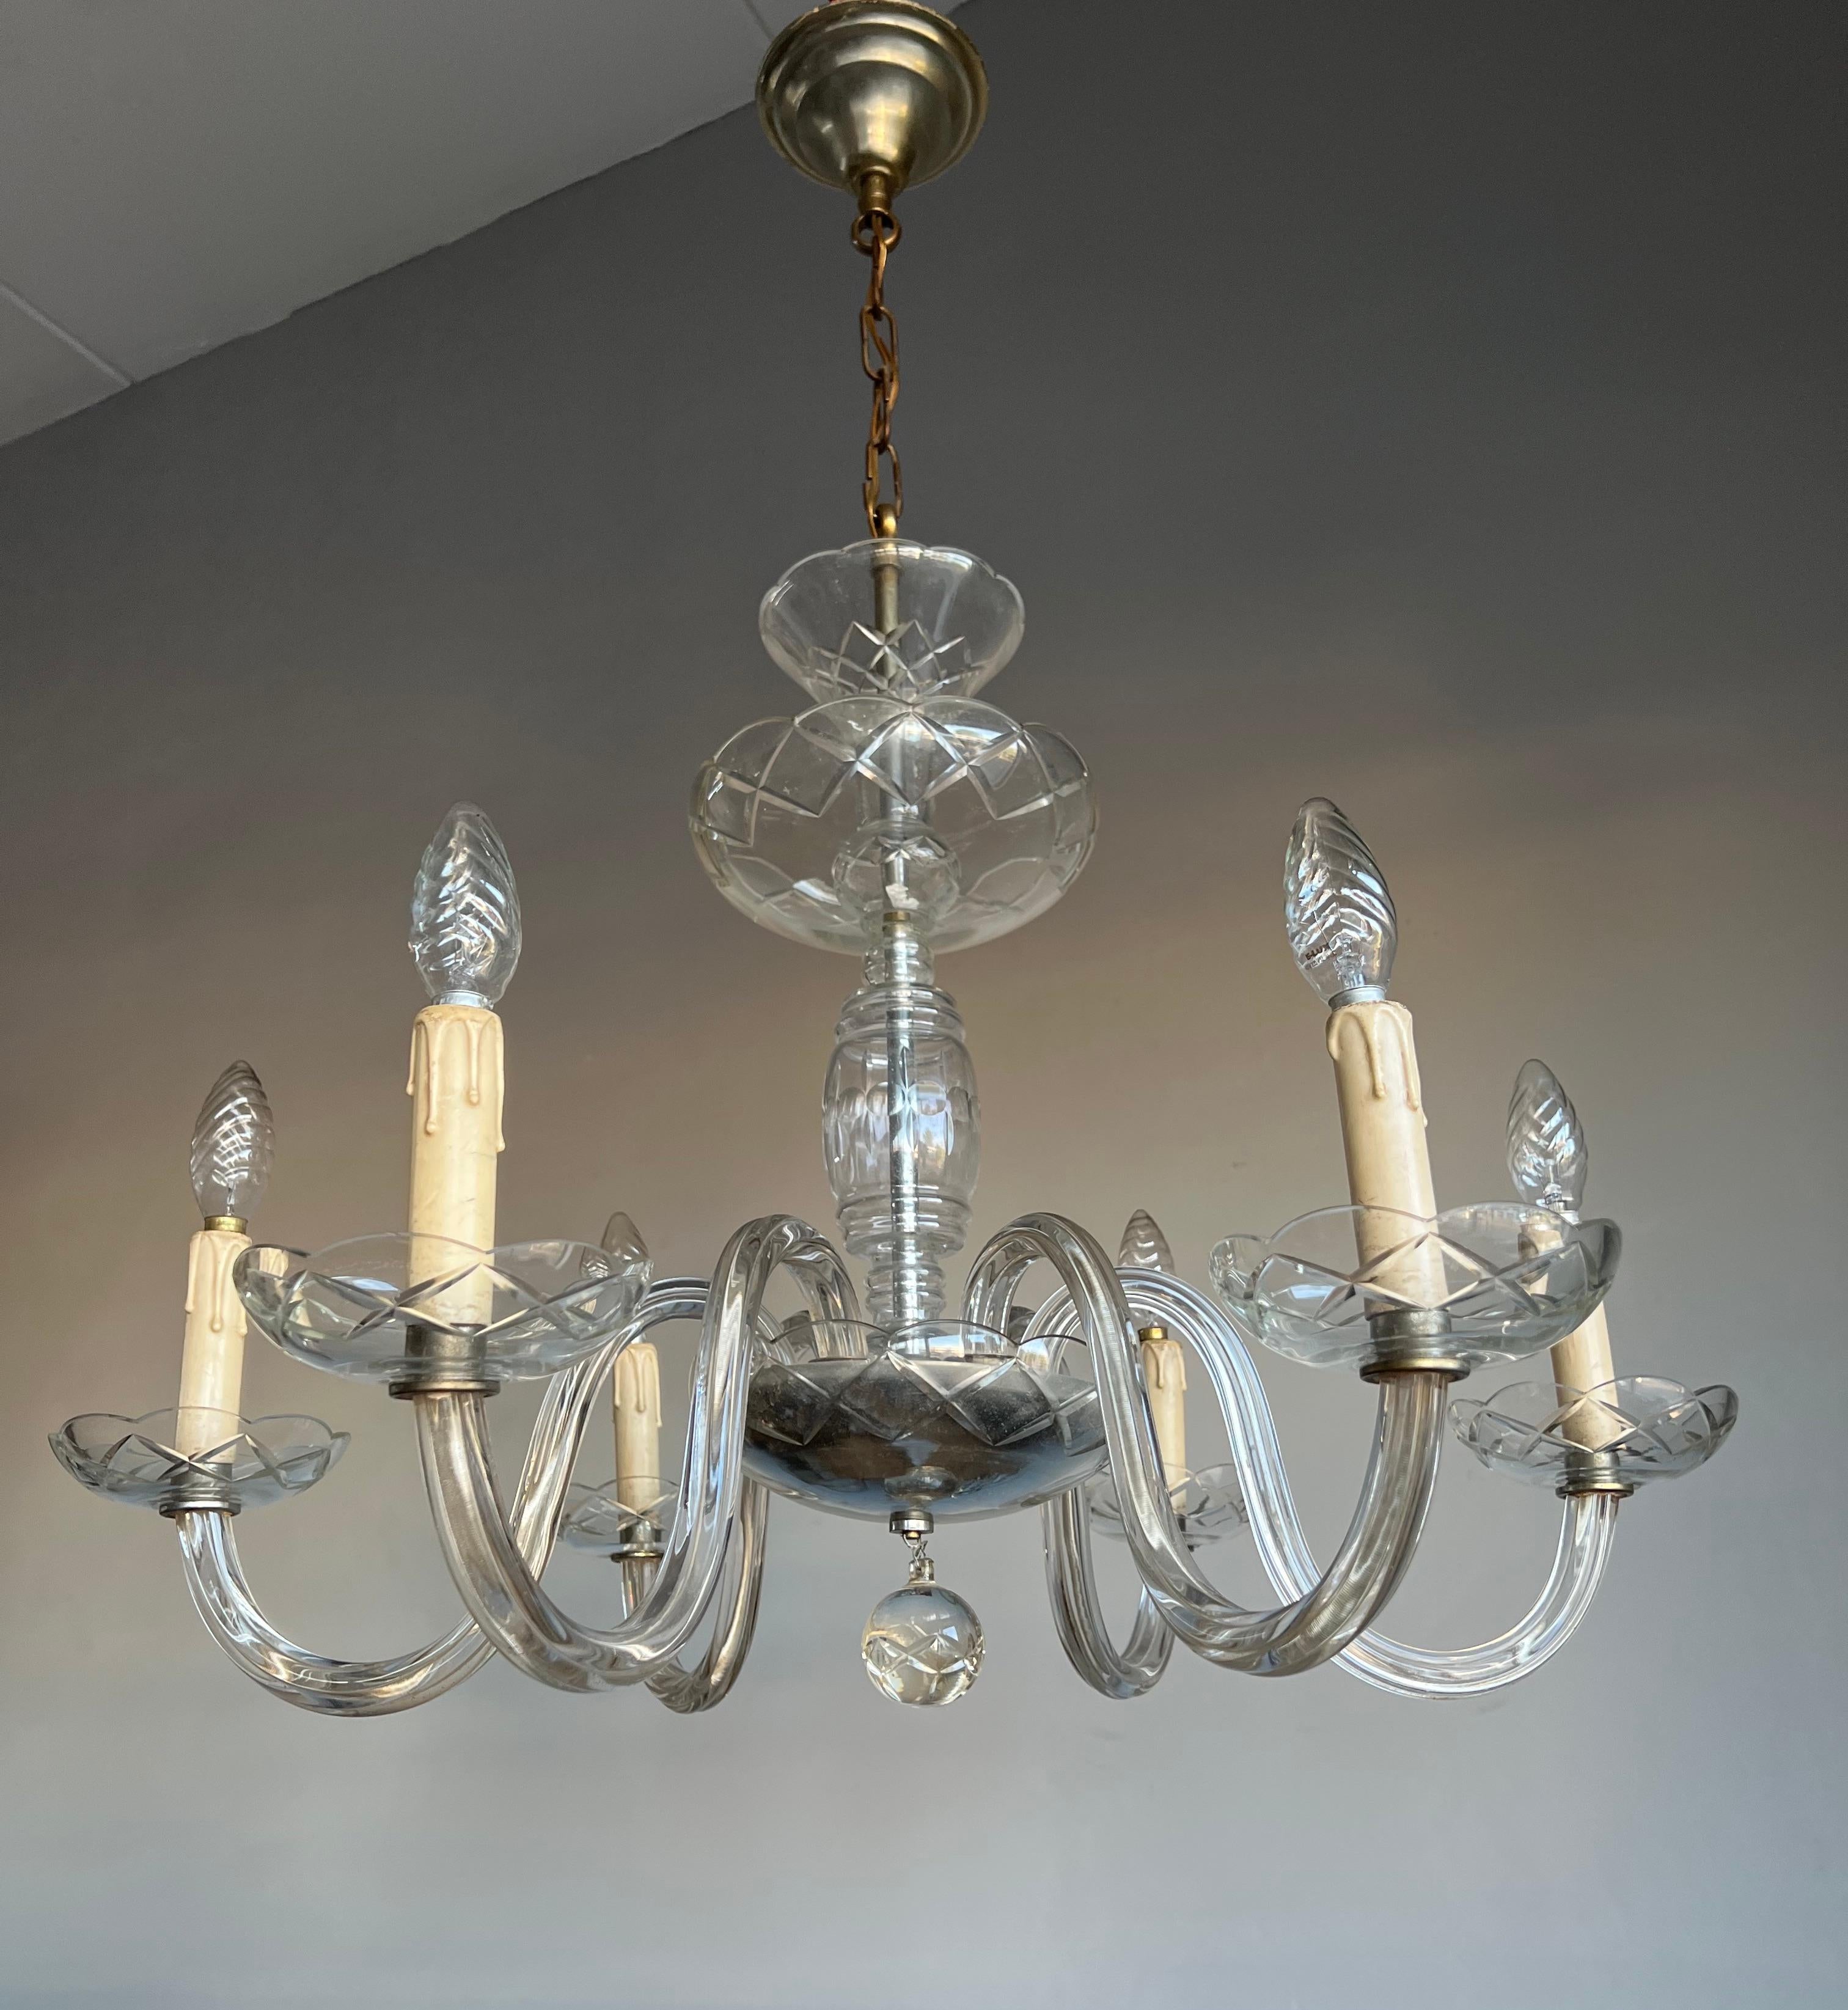 Wonderful Antique Italian Murano Crystal Glass Chandelier / Six Light Pendant For Sale 12